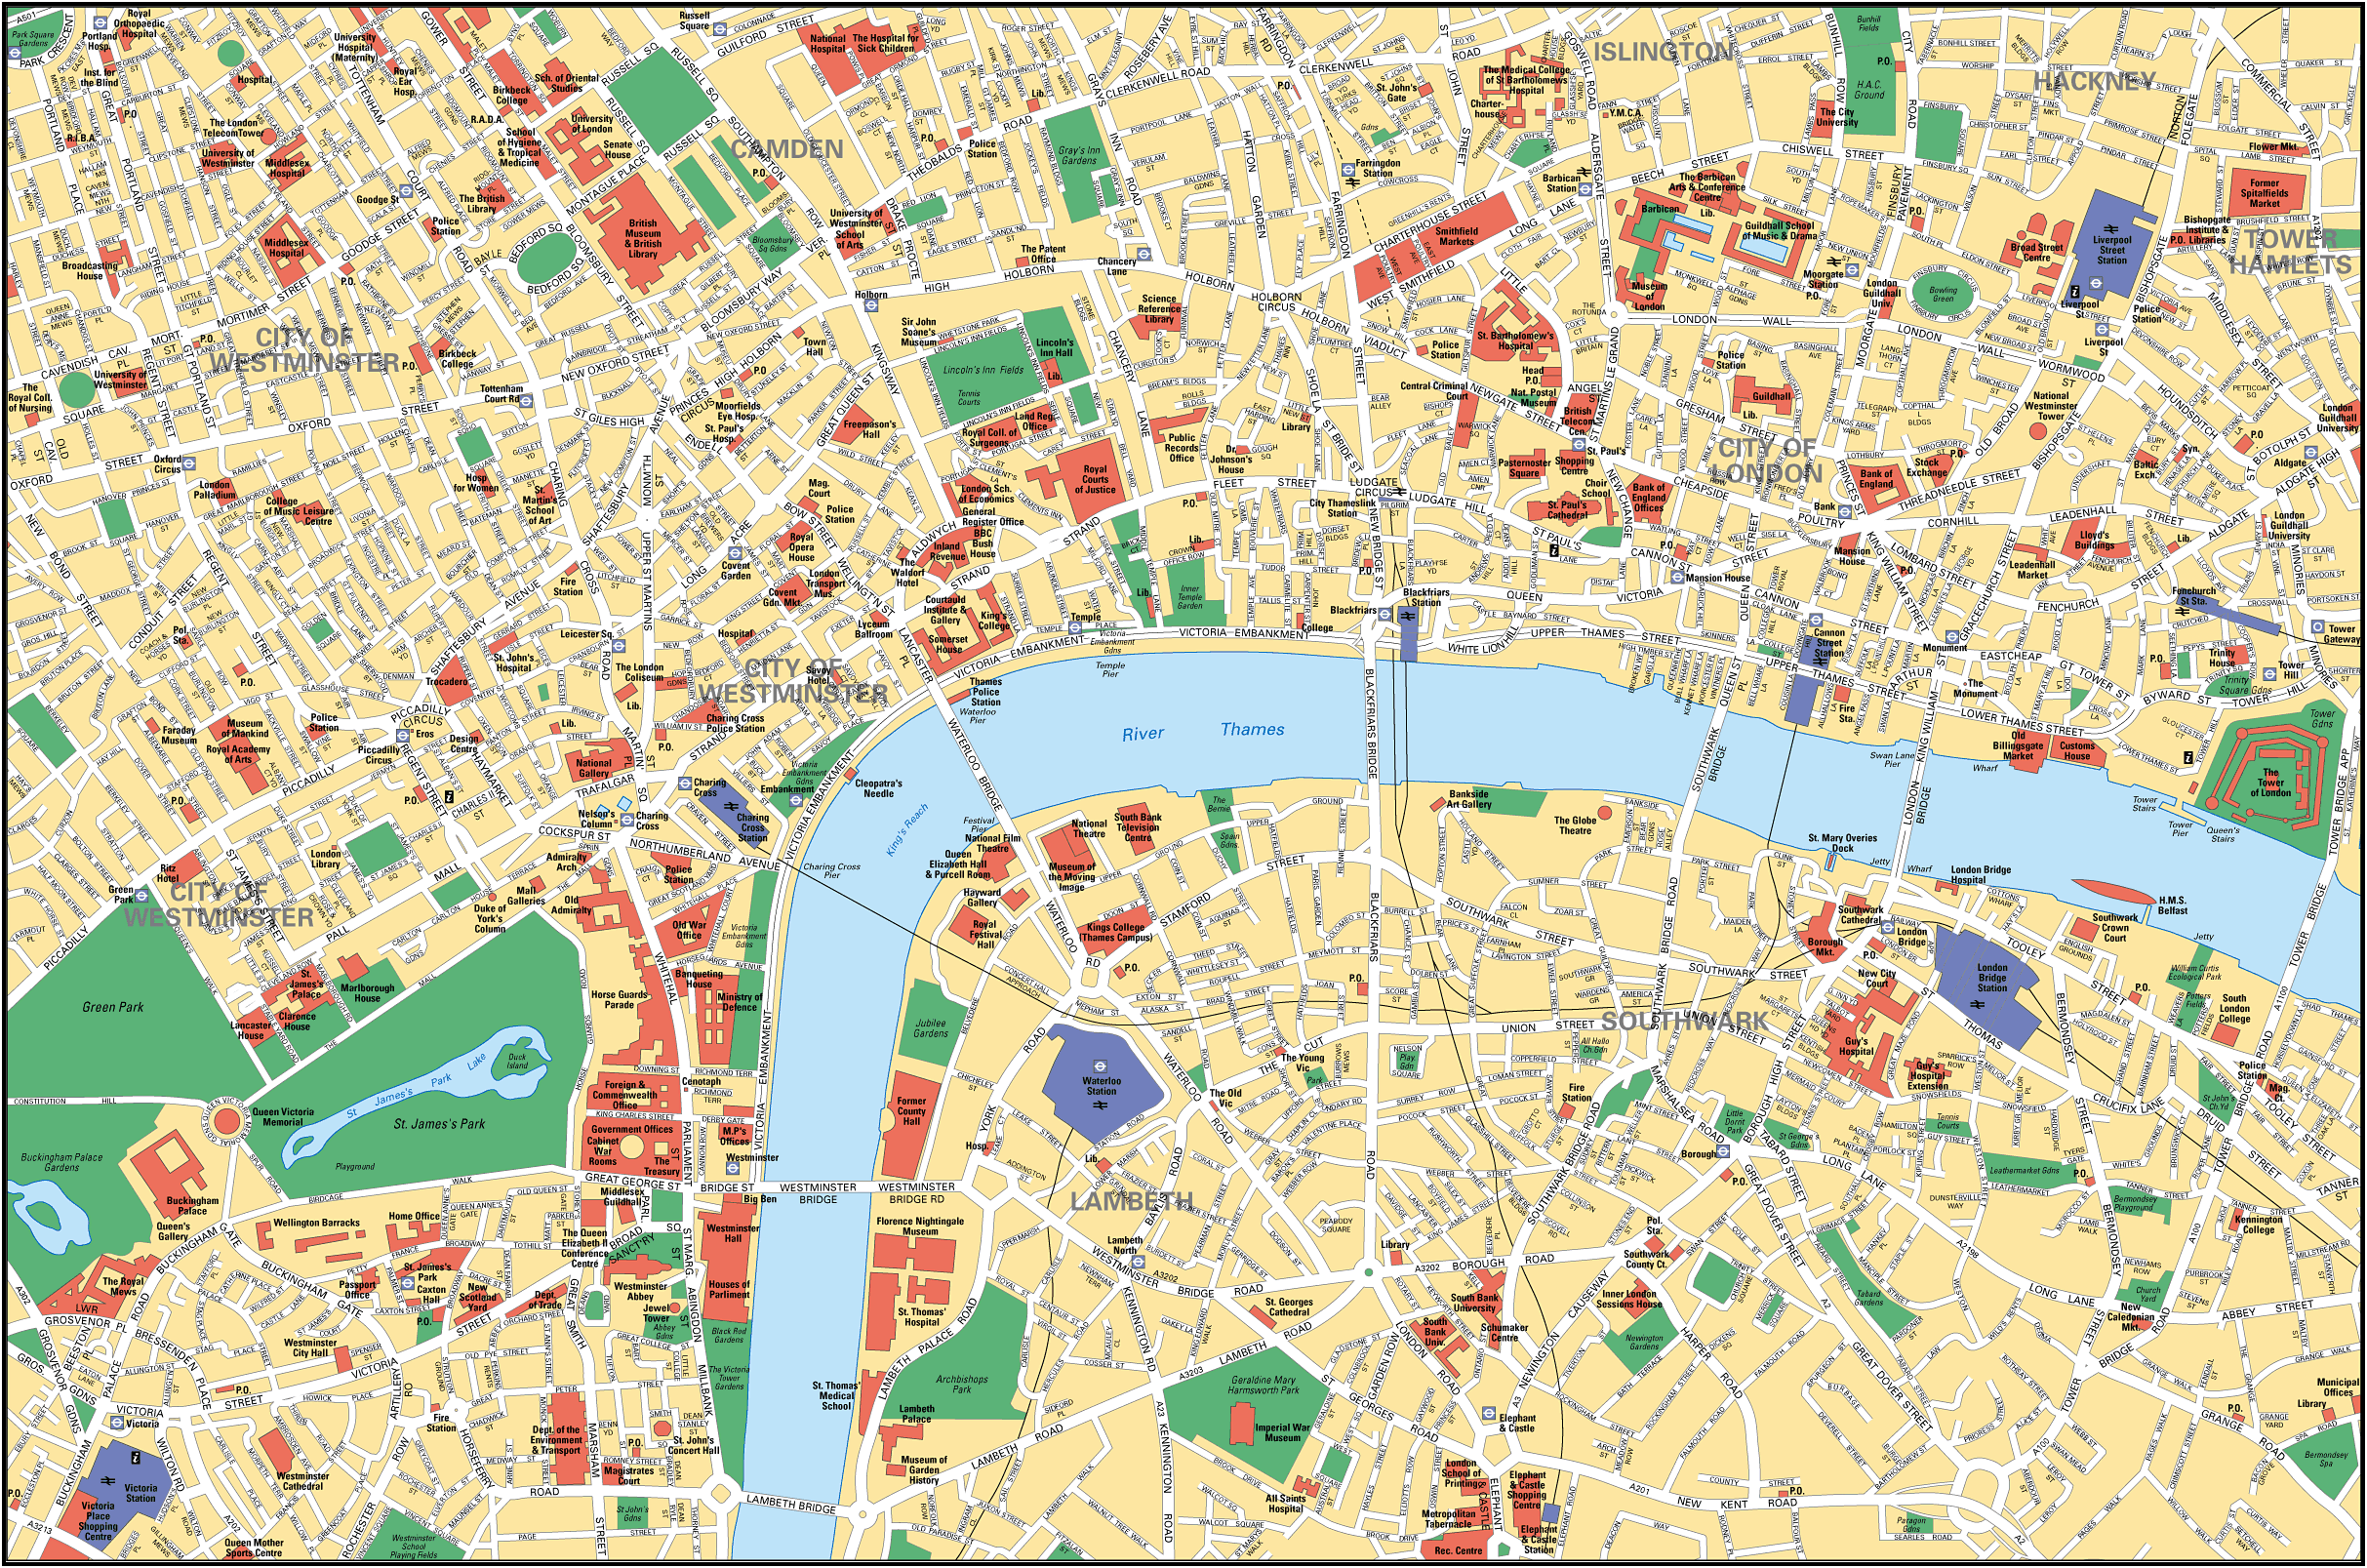 Stadtplan London